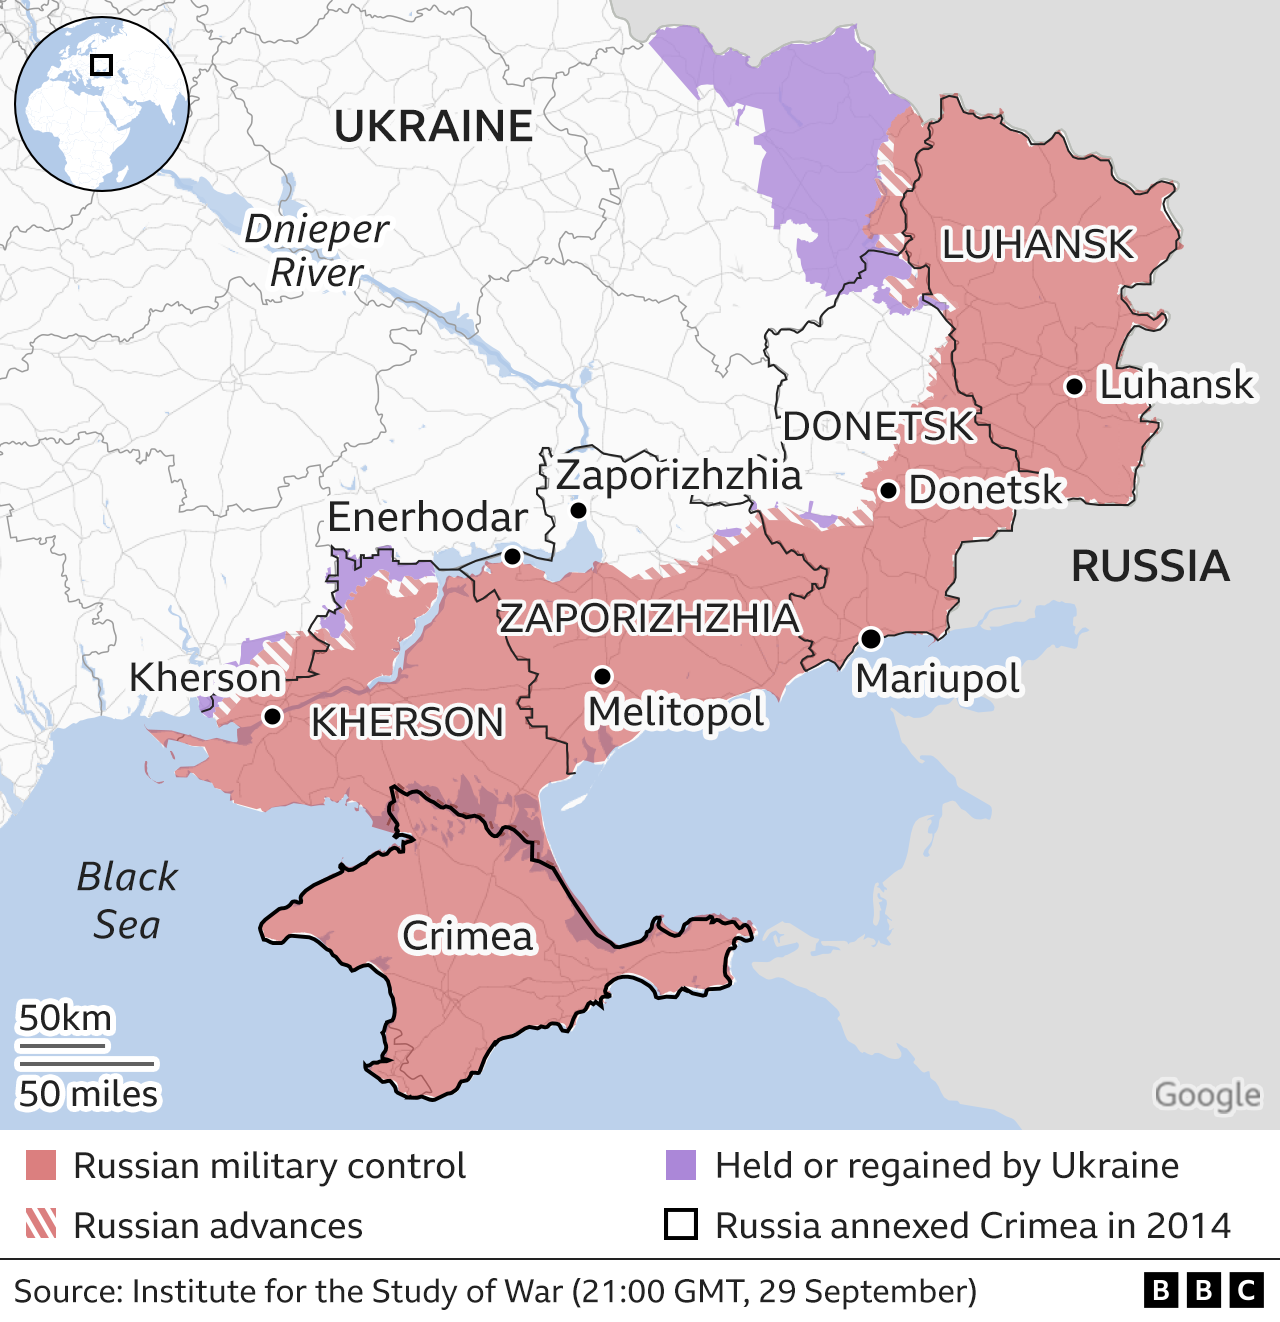 Map of occupied areas of Ukraine